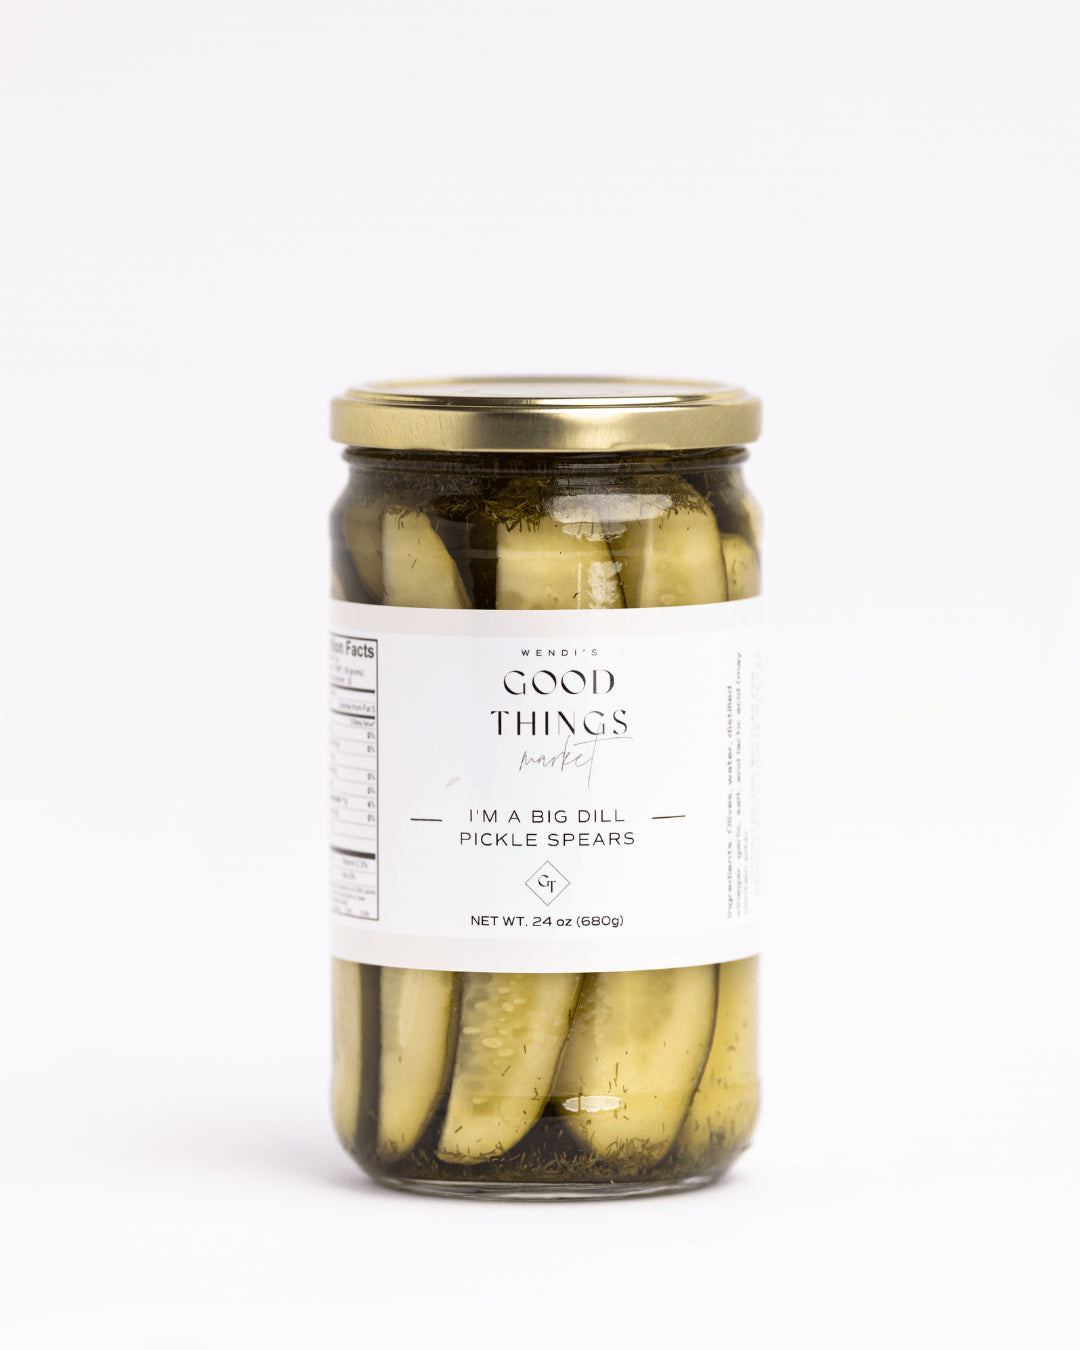 big dill pickle spears, jar of pickles, Wendi's Good Things Market